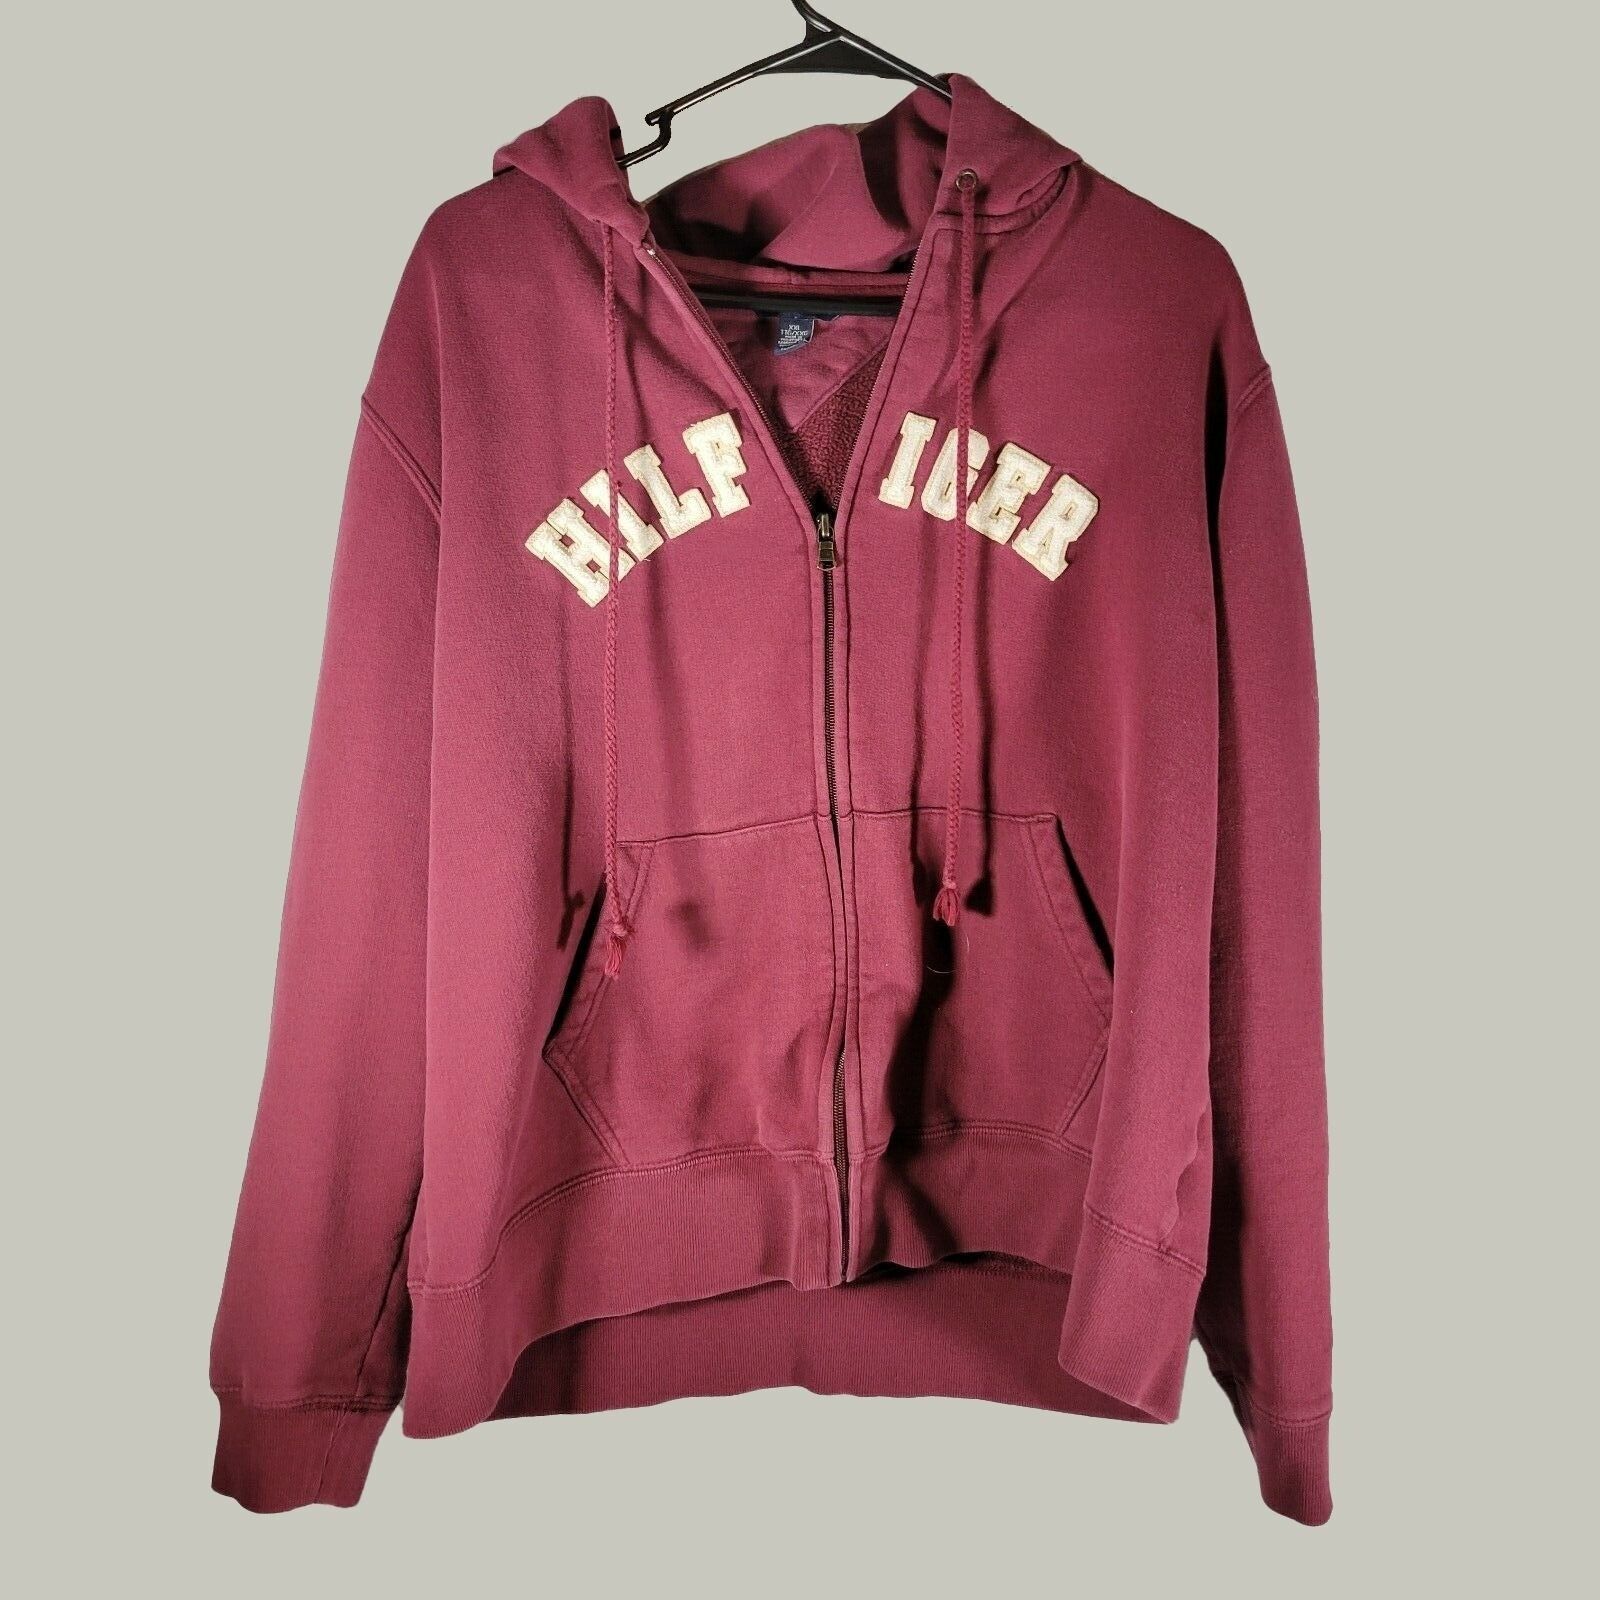 Tommy Hilfiger Teen Jacket Sweatshirt 2XL Youth Full Zip Maroon Hoodie - $16.97